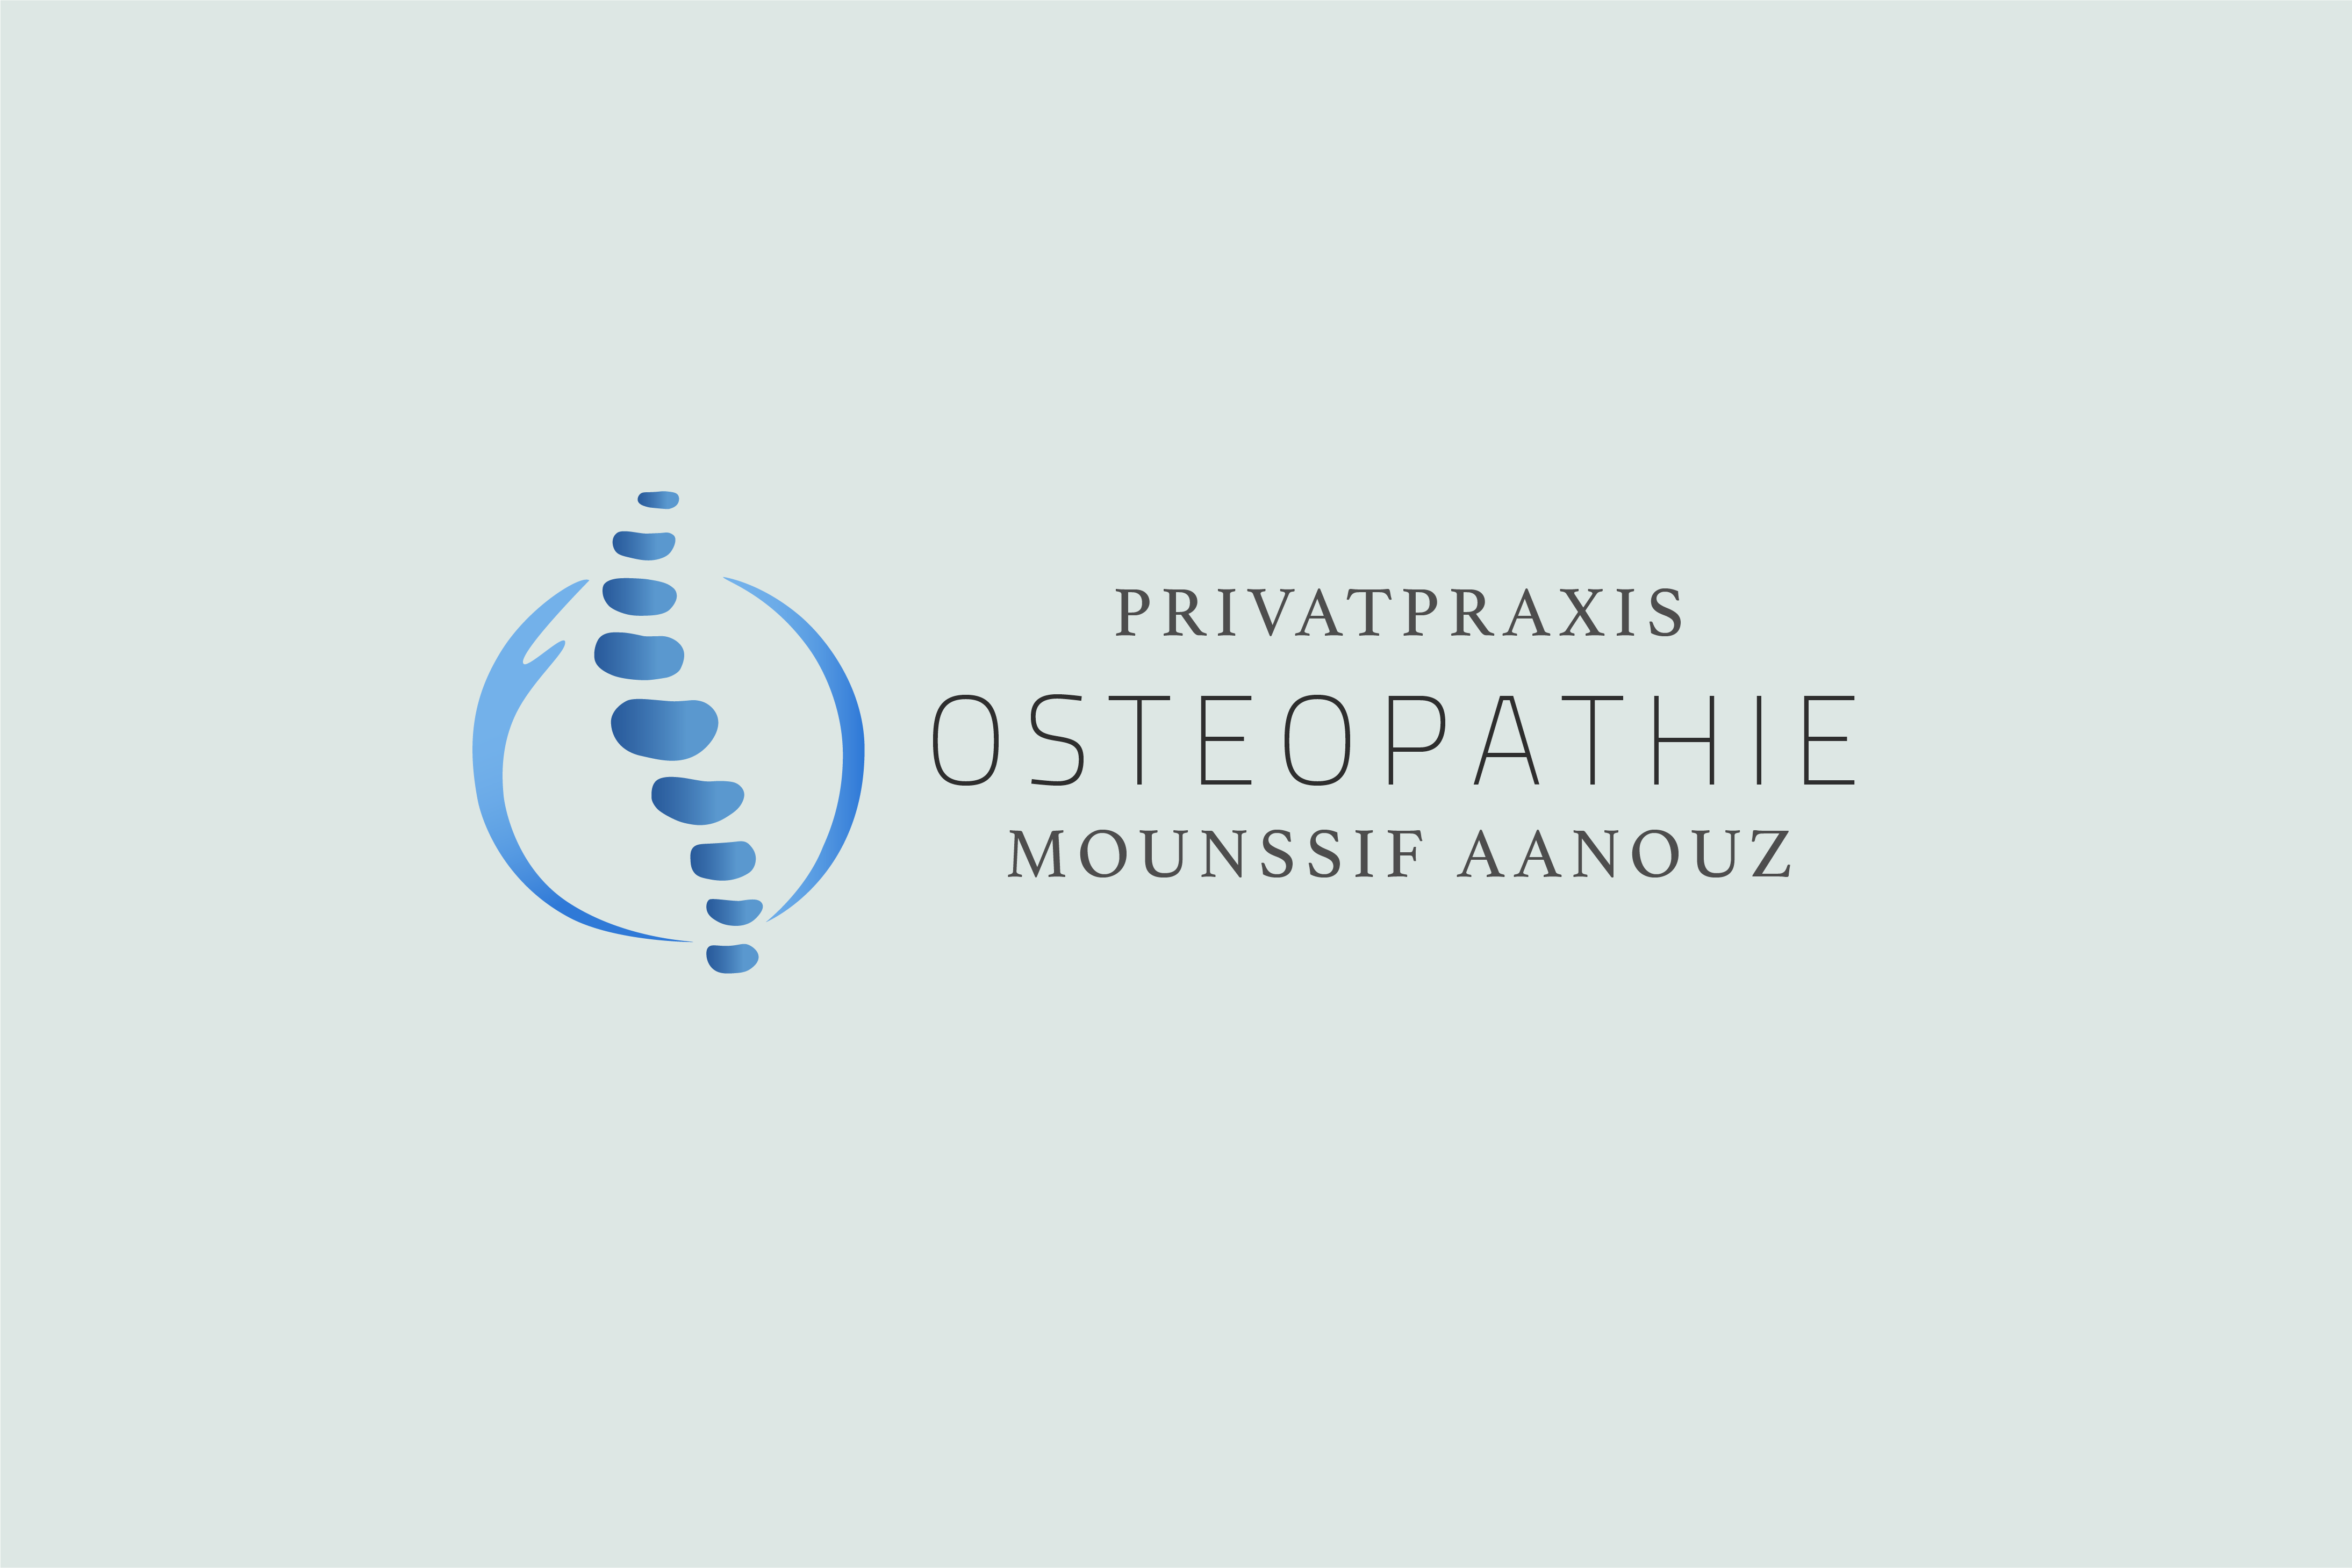 Privatpraxis Osteopathie Frankfurt in Frankfurt am Main